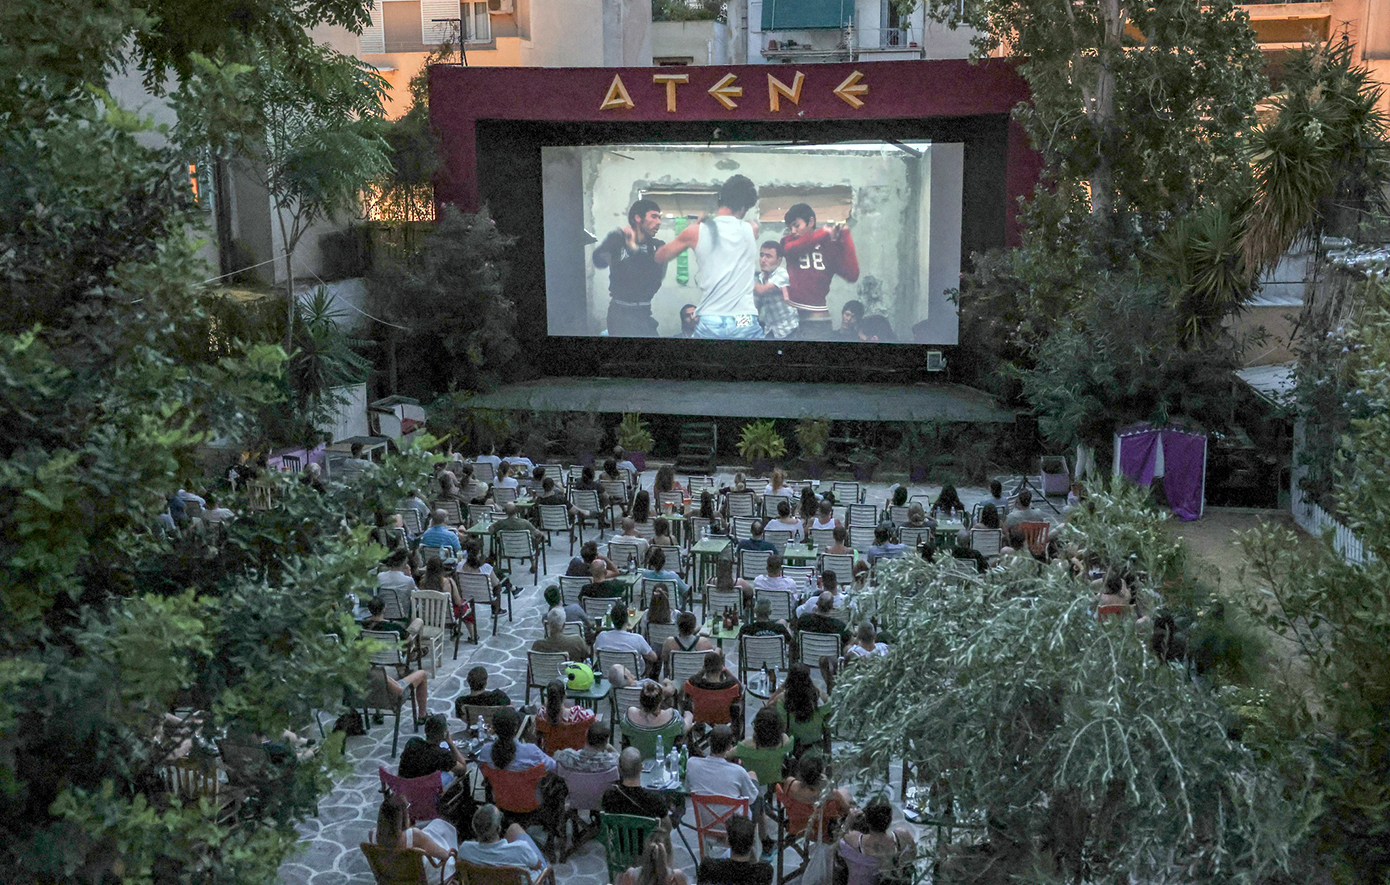 Cine Athenee: Το σινεφίλ θερινό στέκι της πόλης με τις καλύτερες παλιές ταινίες